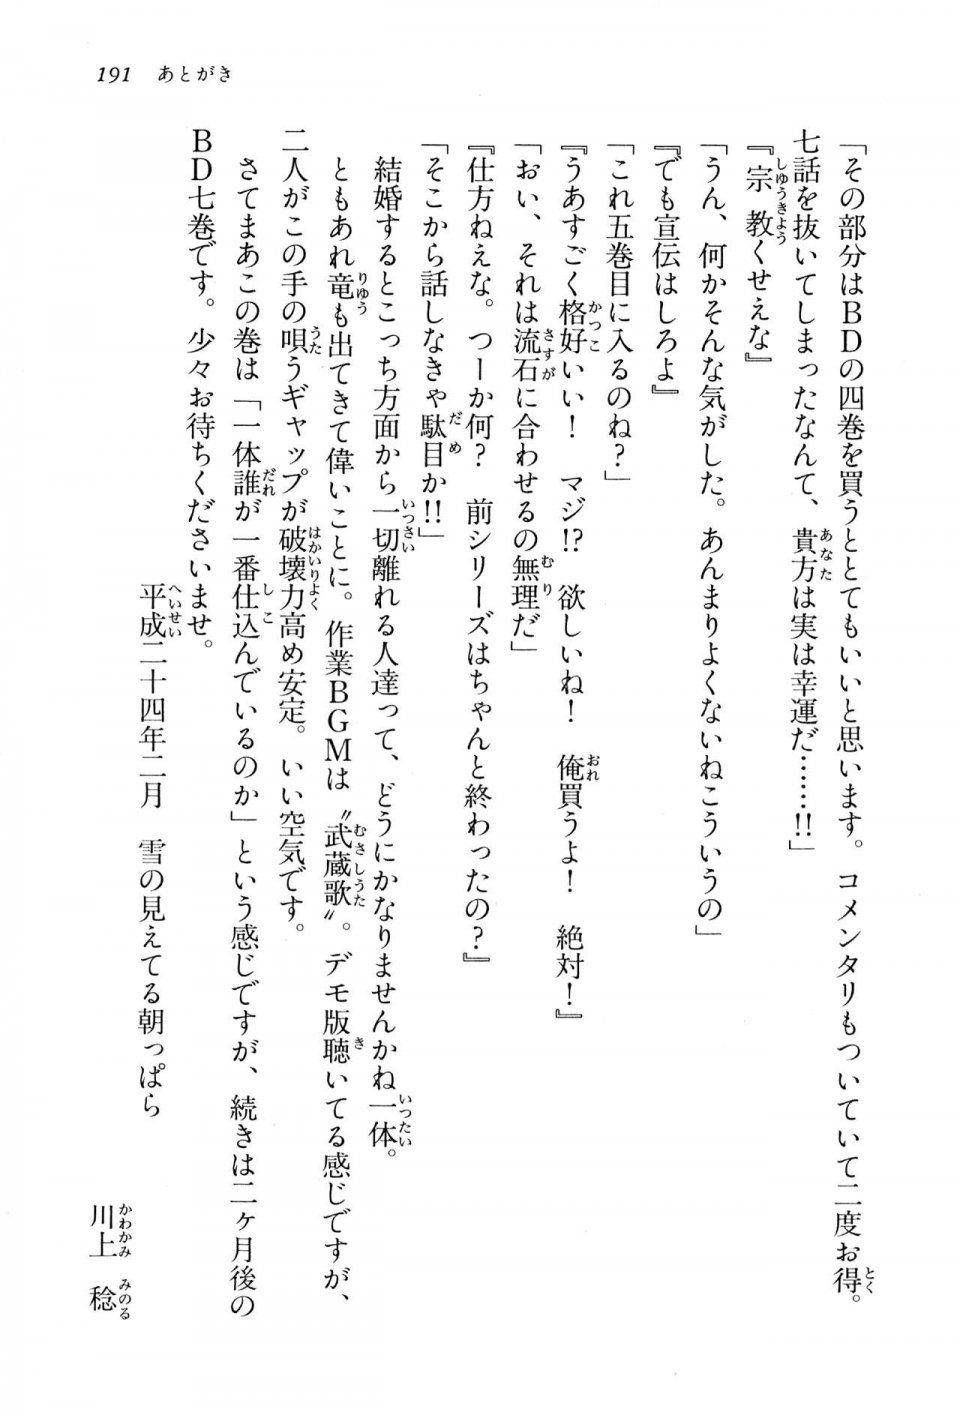 Kyoukai Senjou no Horizon BD Special Mininovel Vol 3(2A) - Photo #195